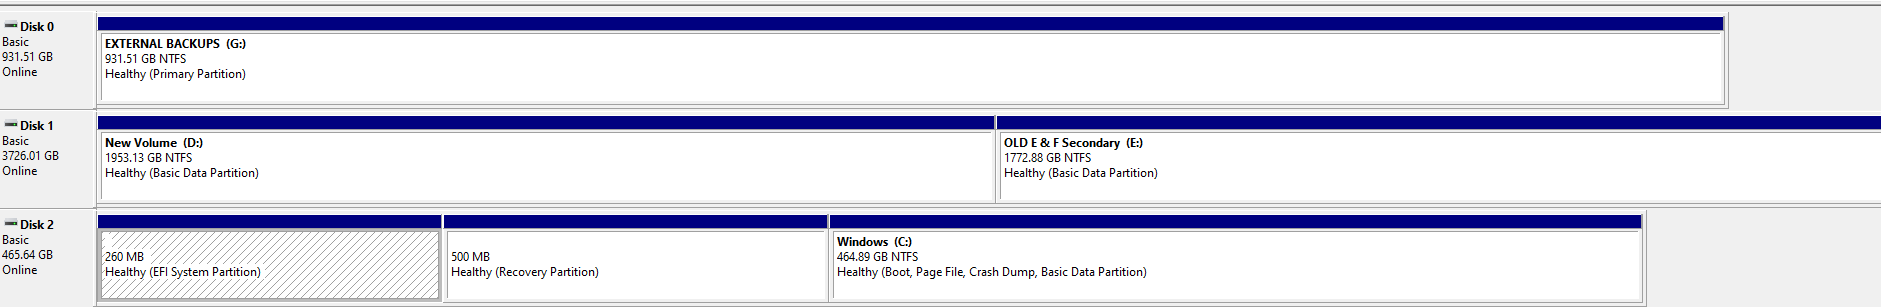 Disk Management Screenshot2.png